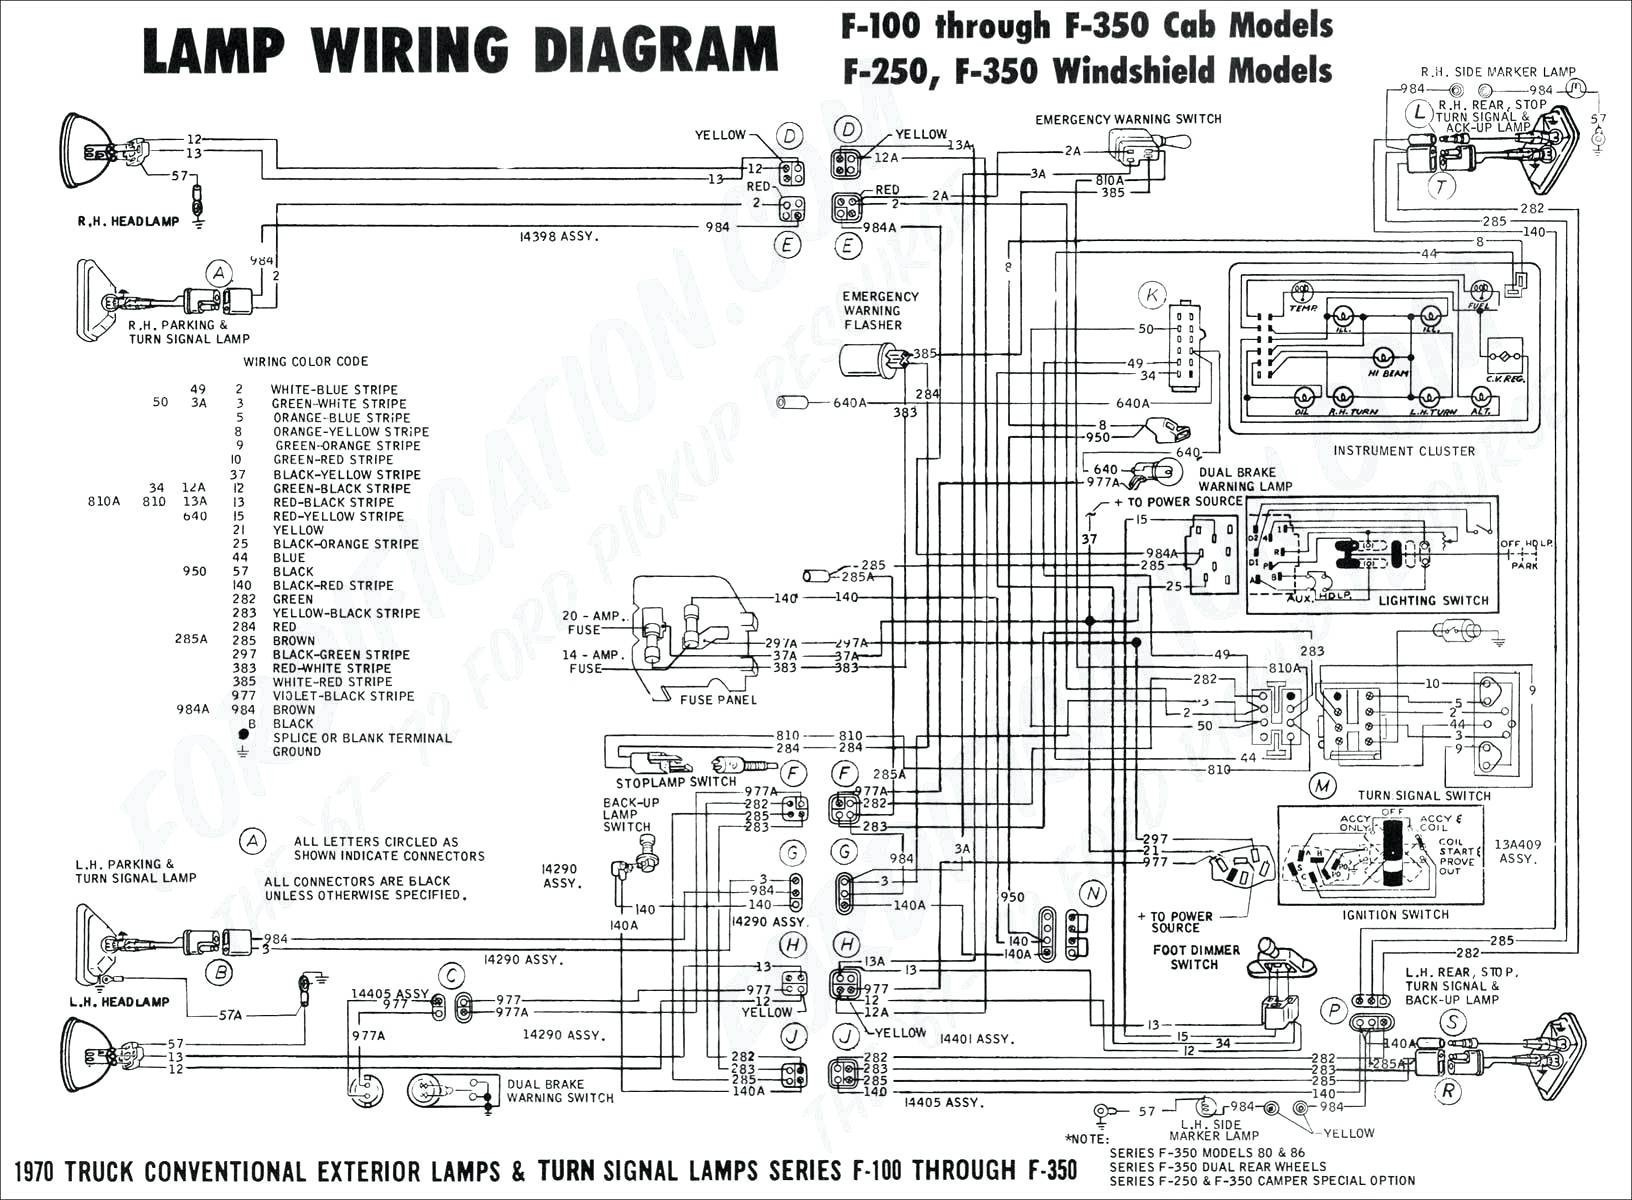 Wiring Diagram Replace Generator With Alternator 6 V26No1 Fig4 - Wiring Diagram Replace Generator With Alternator